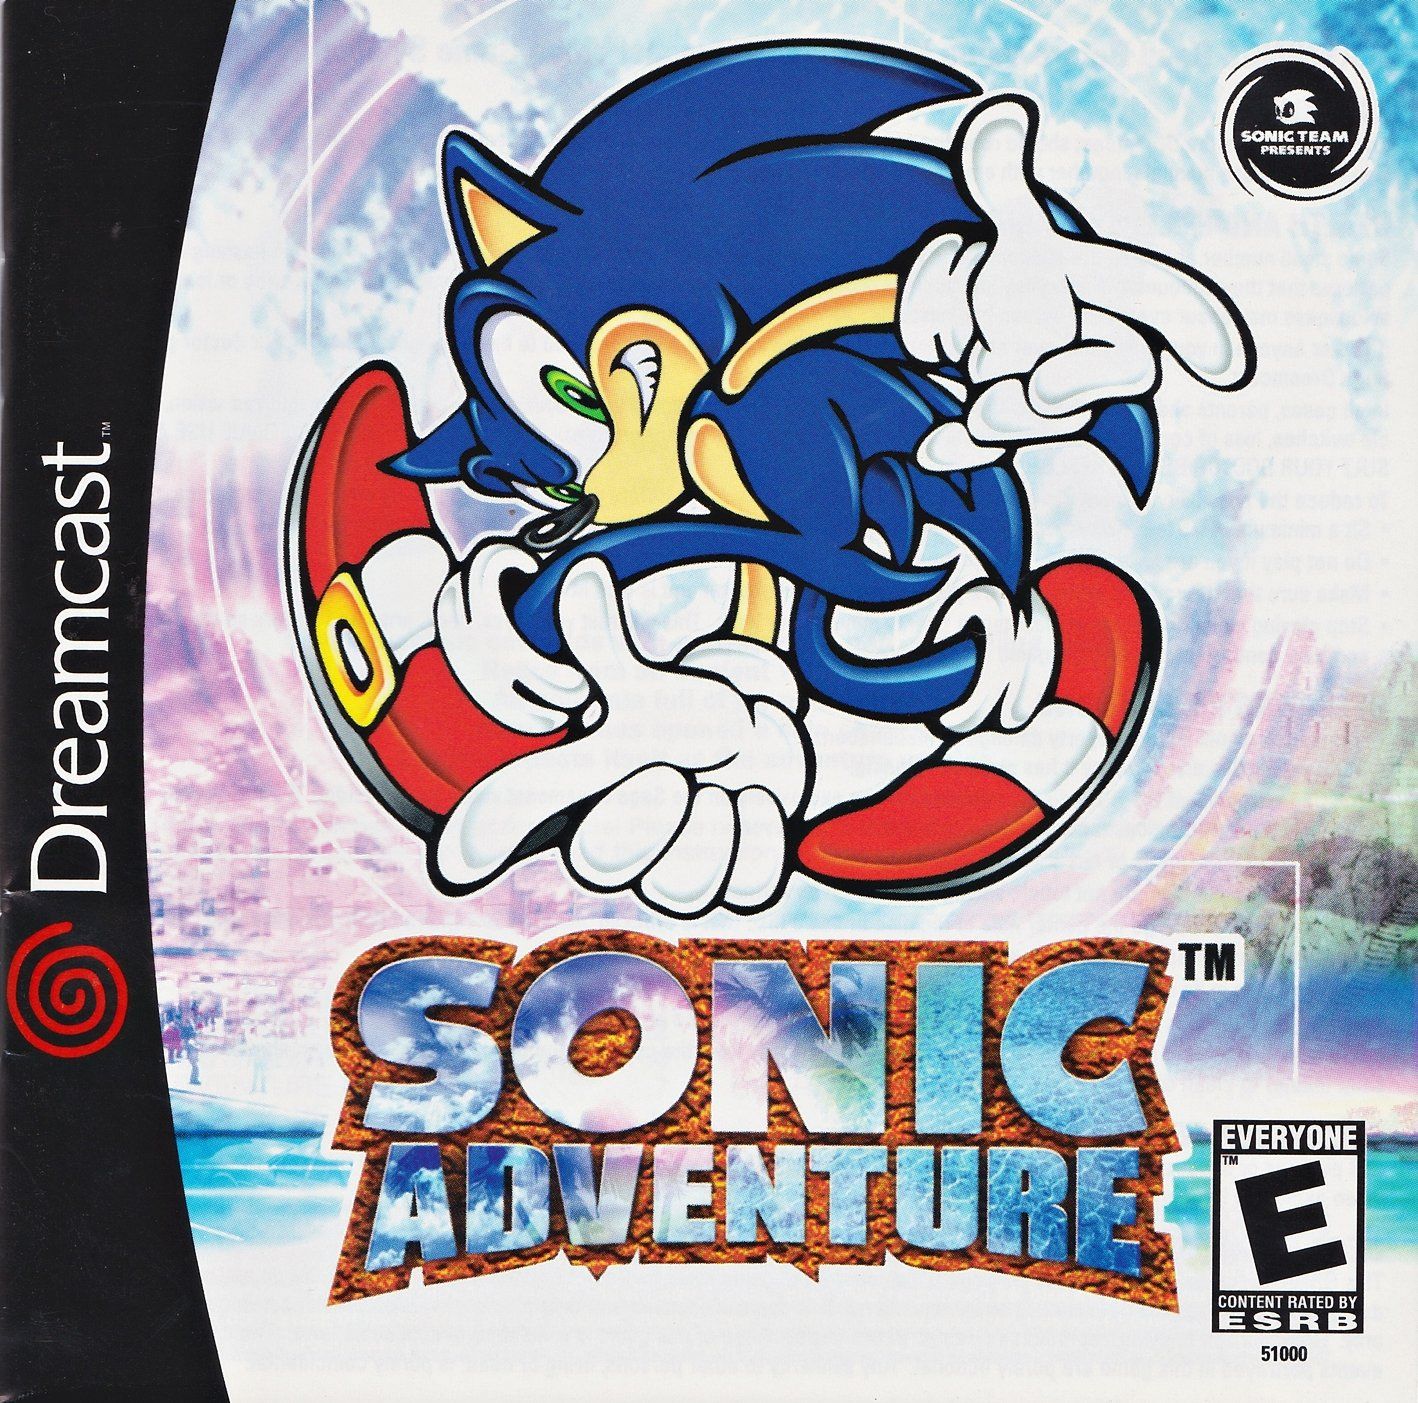 Sonic Adventure - Wikipedia  Sonic adventure, Sonic the hedgehog, Sega  dreamcast